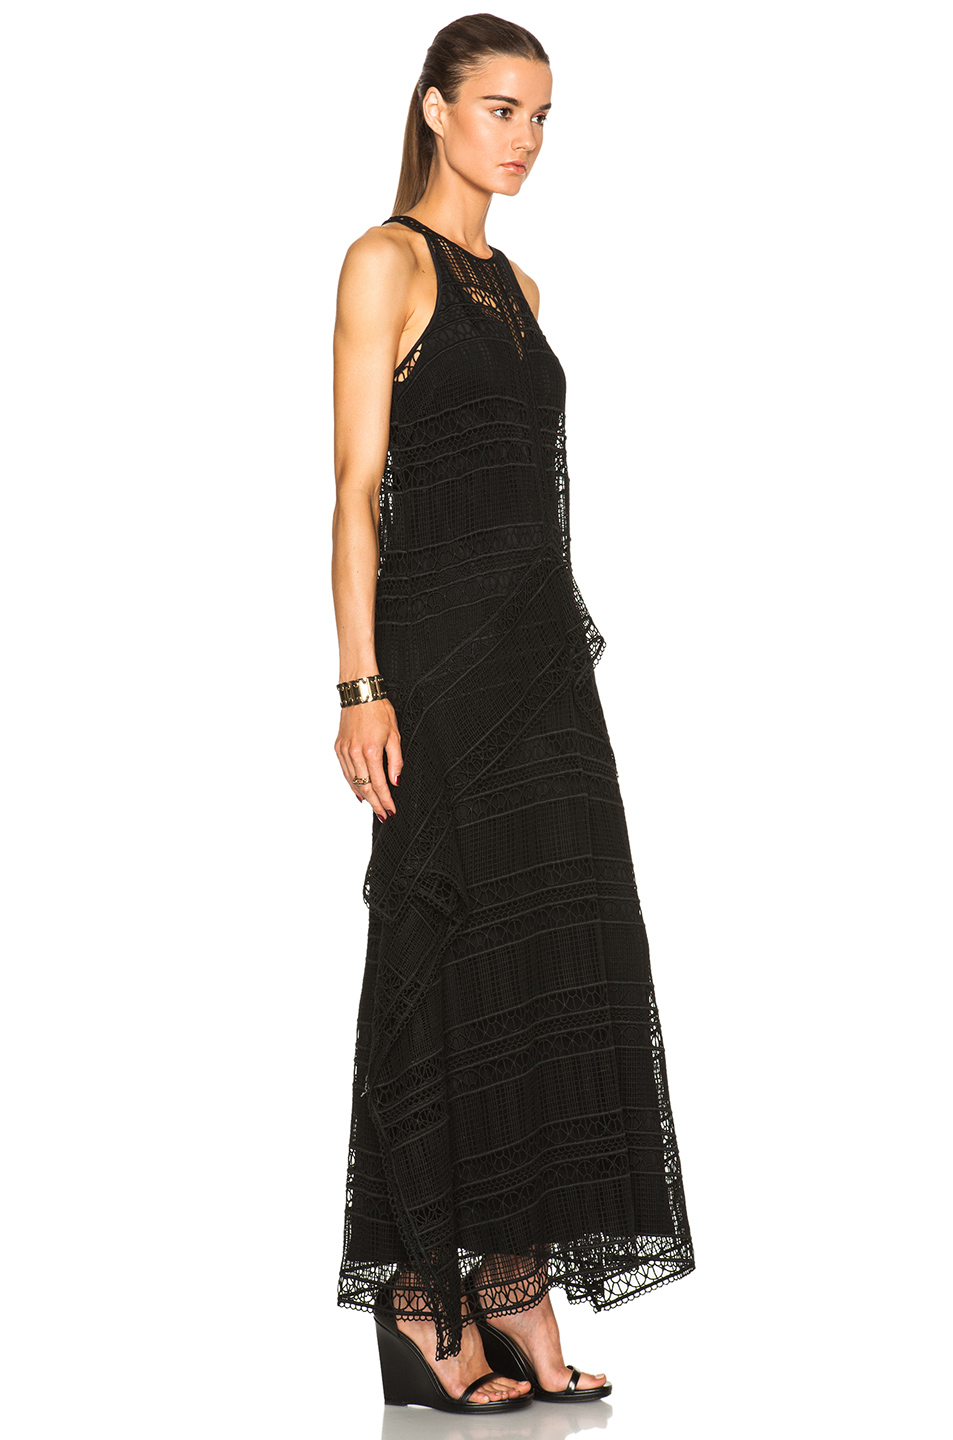 Lyst - Erdem Shawnee Dress in Black